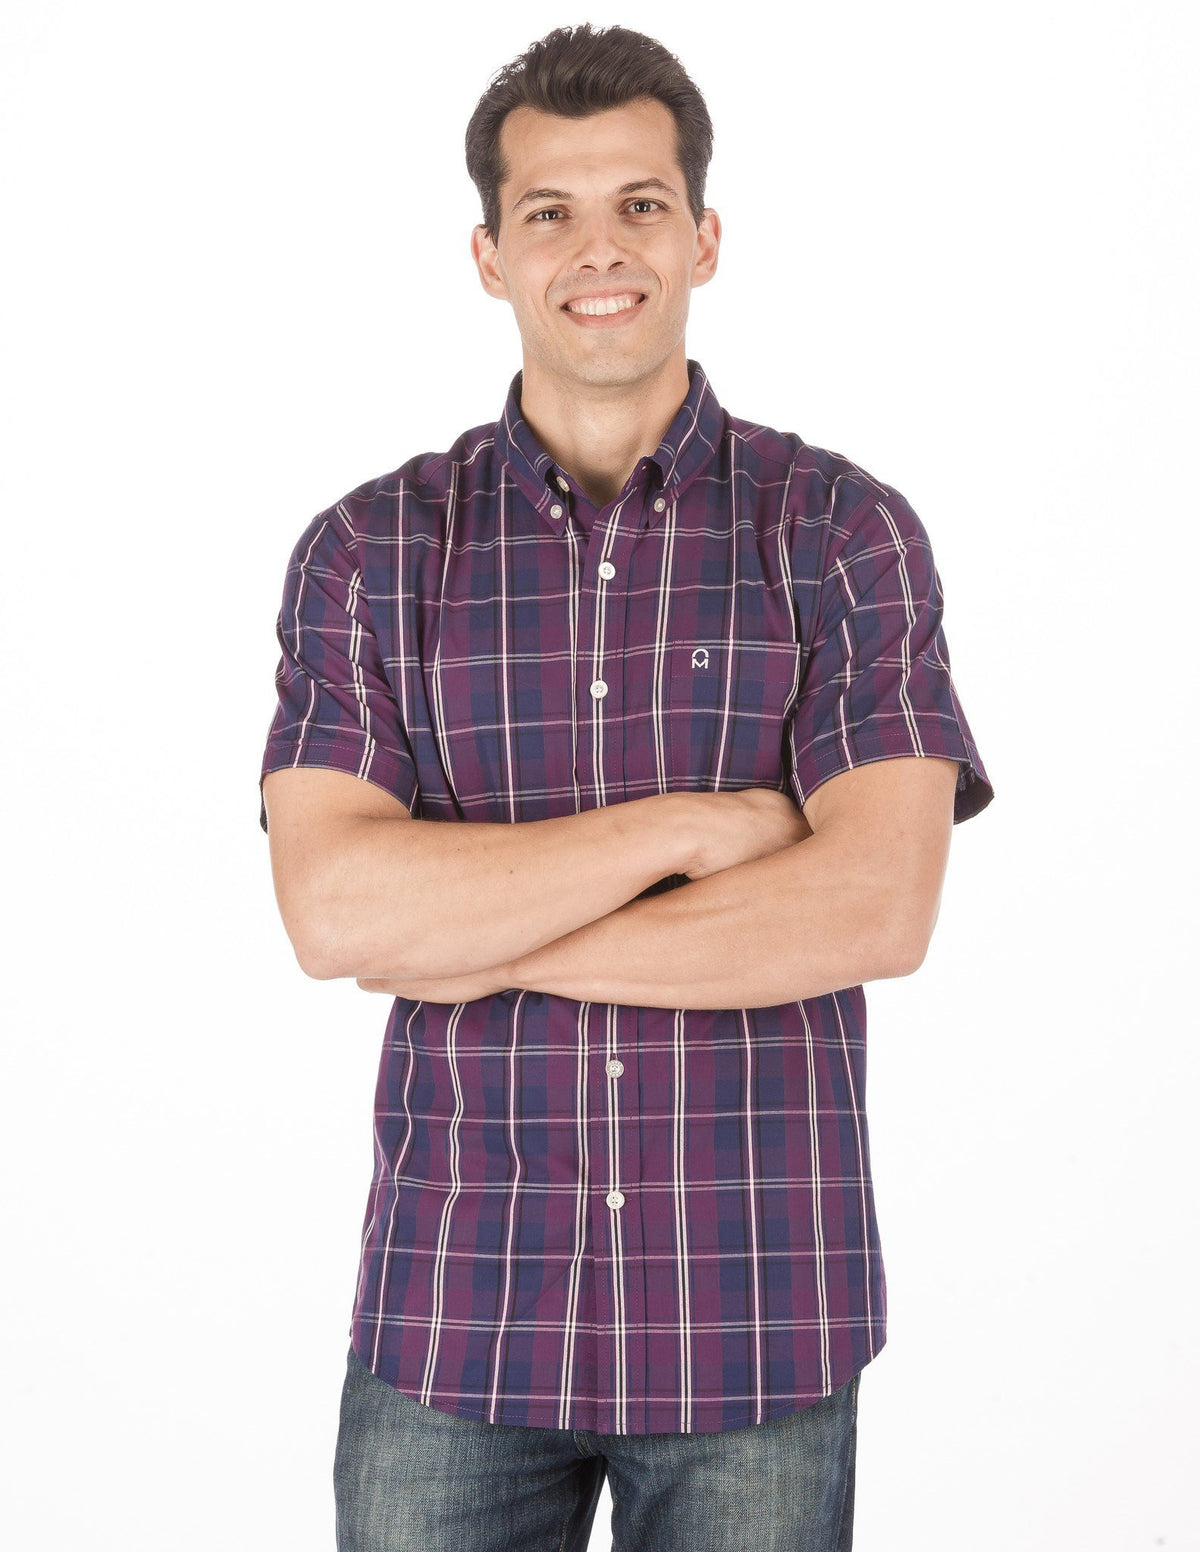 Men's 100% Cotton Casual Short Sleeve Shirt - Regular Fit - Plaid Plum/Blue